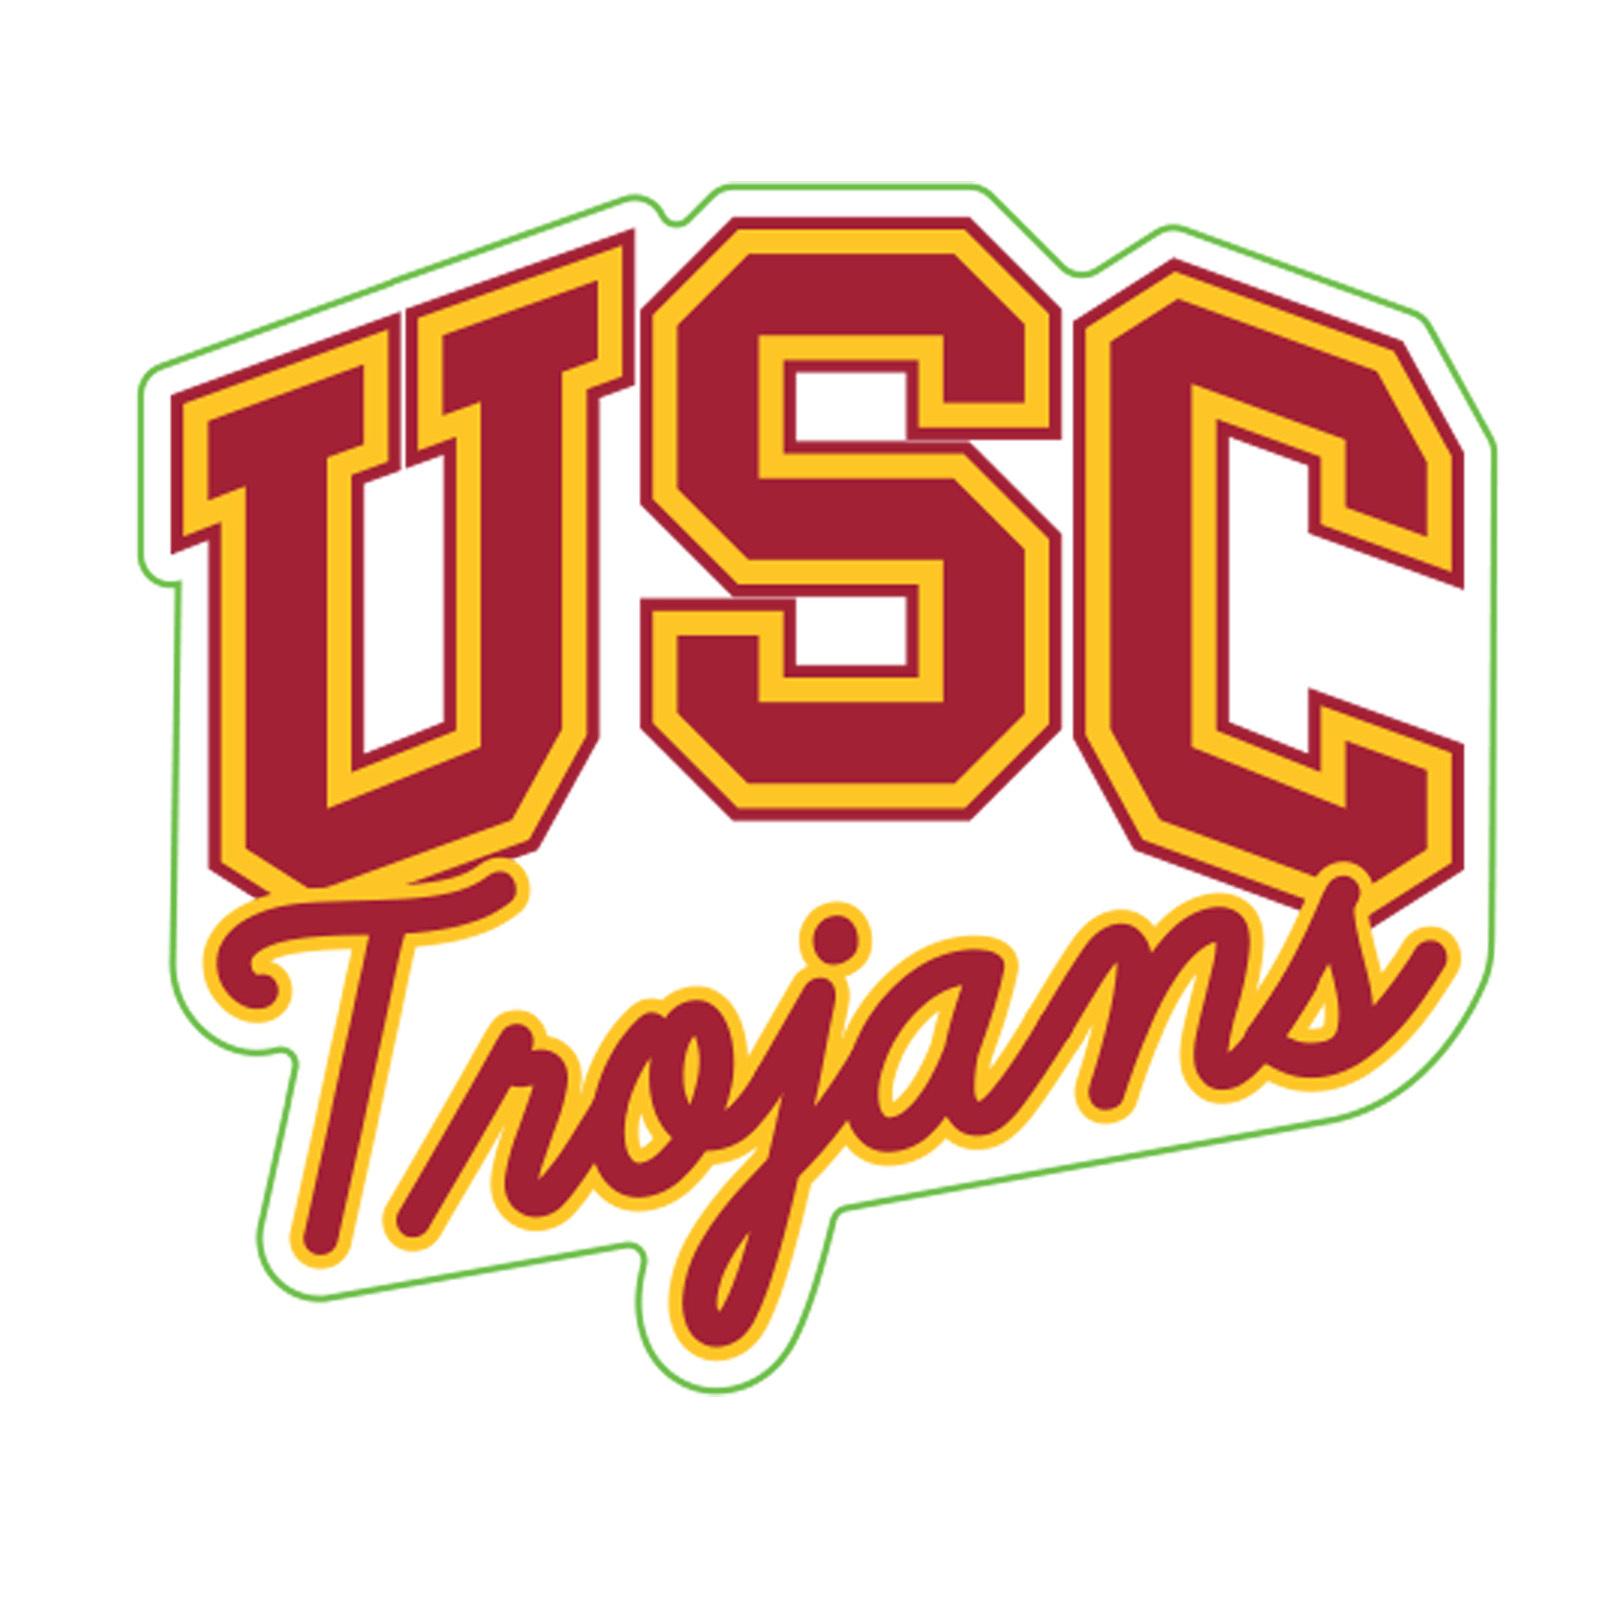 USC Trojans Small Sticker image01